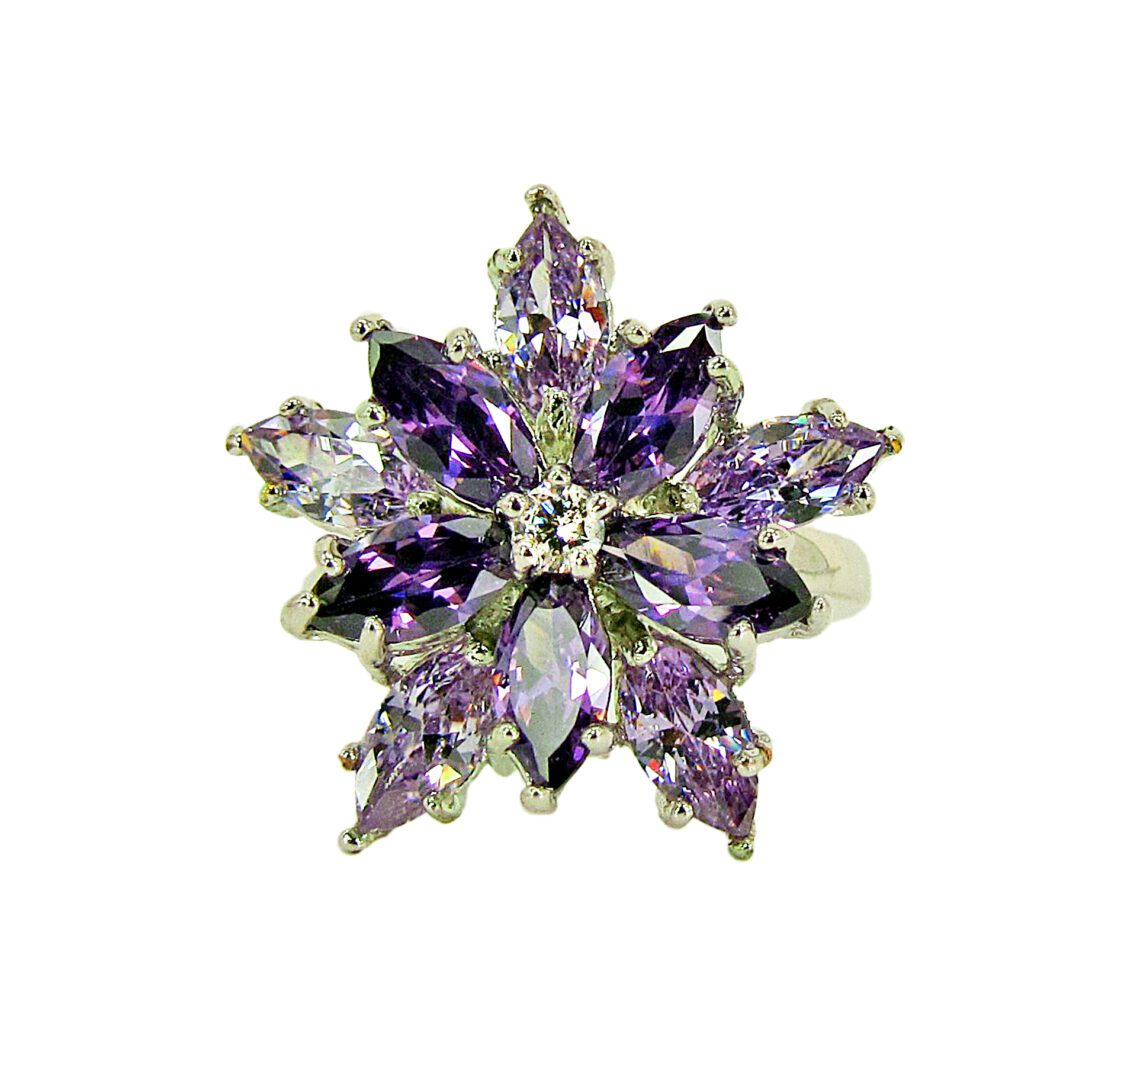 ring with violet gems arranged in a starburst